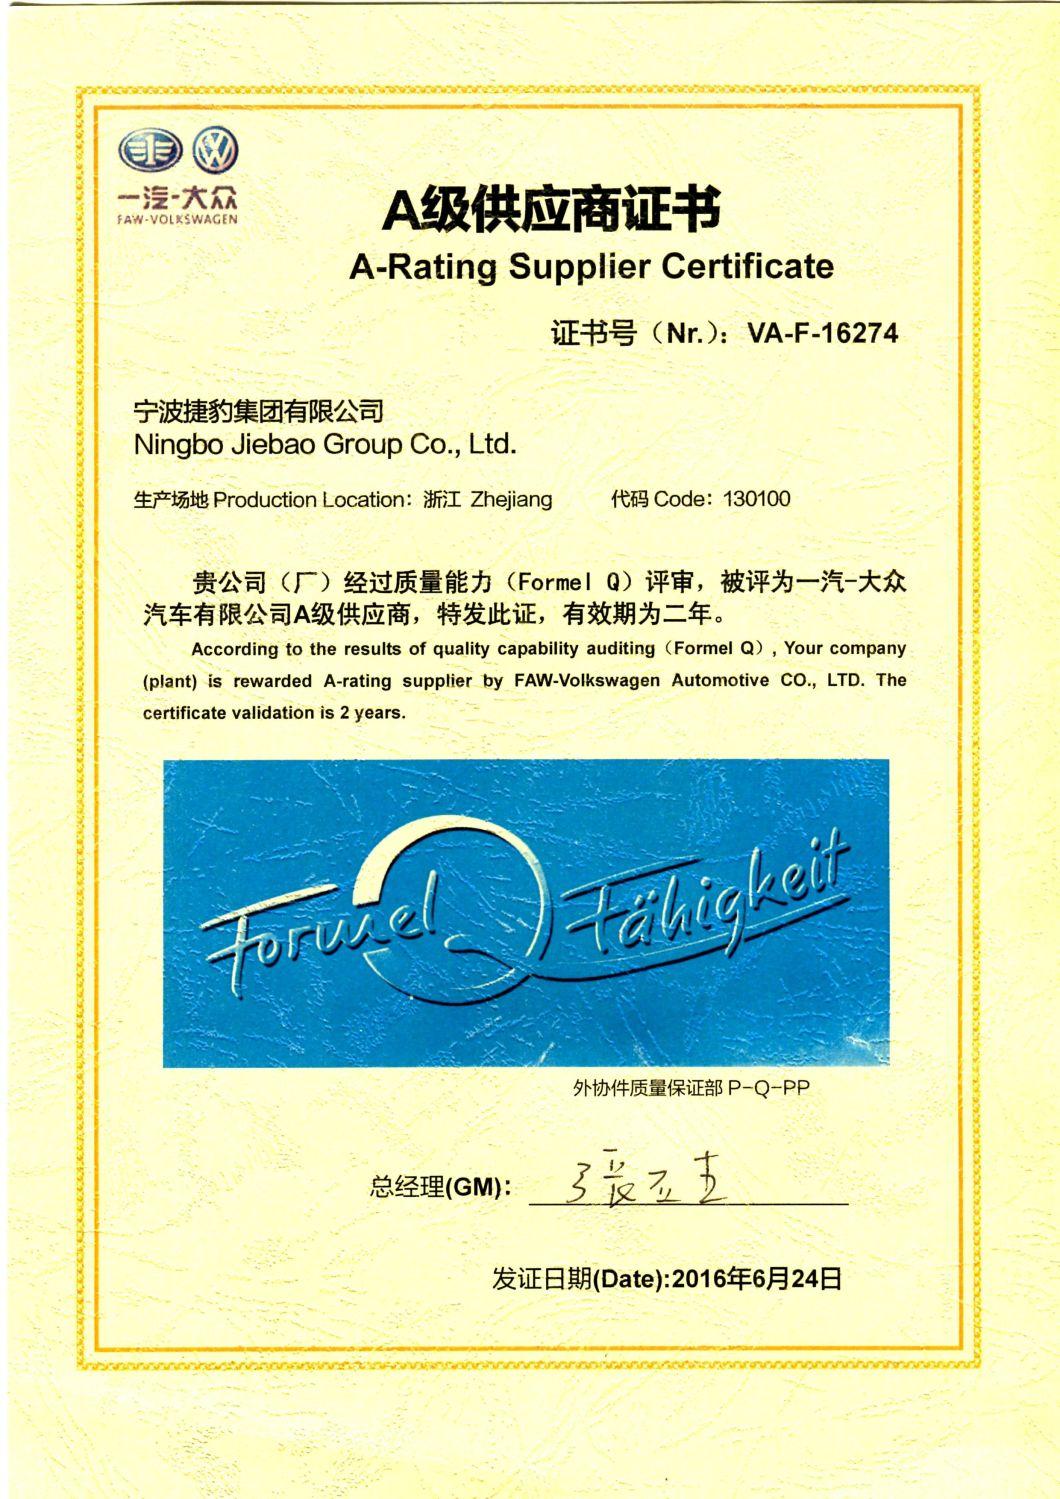 General Motors Belt Maker - Jiebao High Quality Neoprene Transmission Parts Fan Automotive Textile Garment Packaging Agricultural Machinery Ribbed Belt